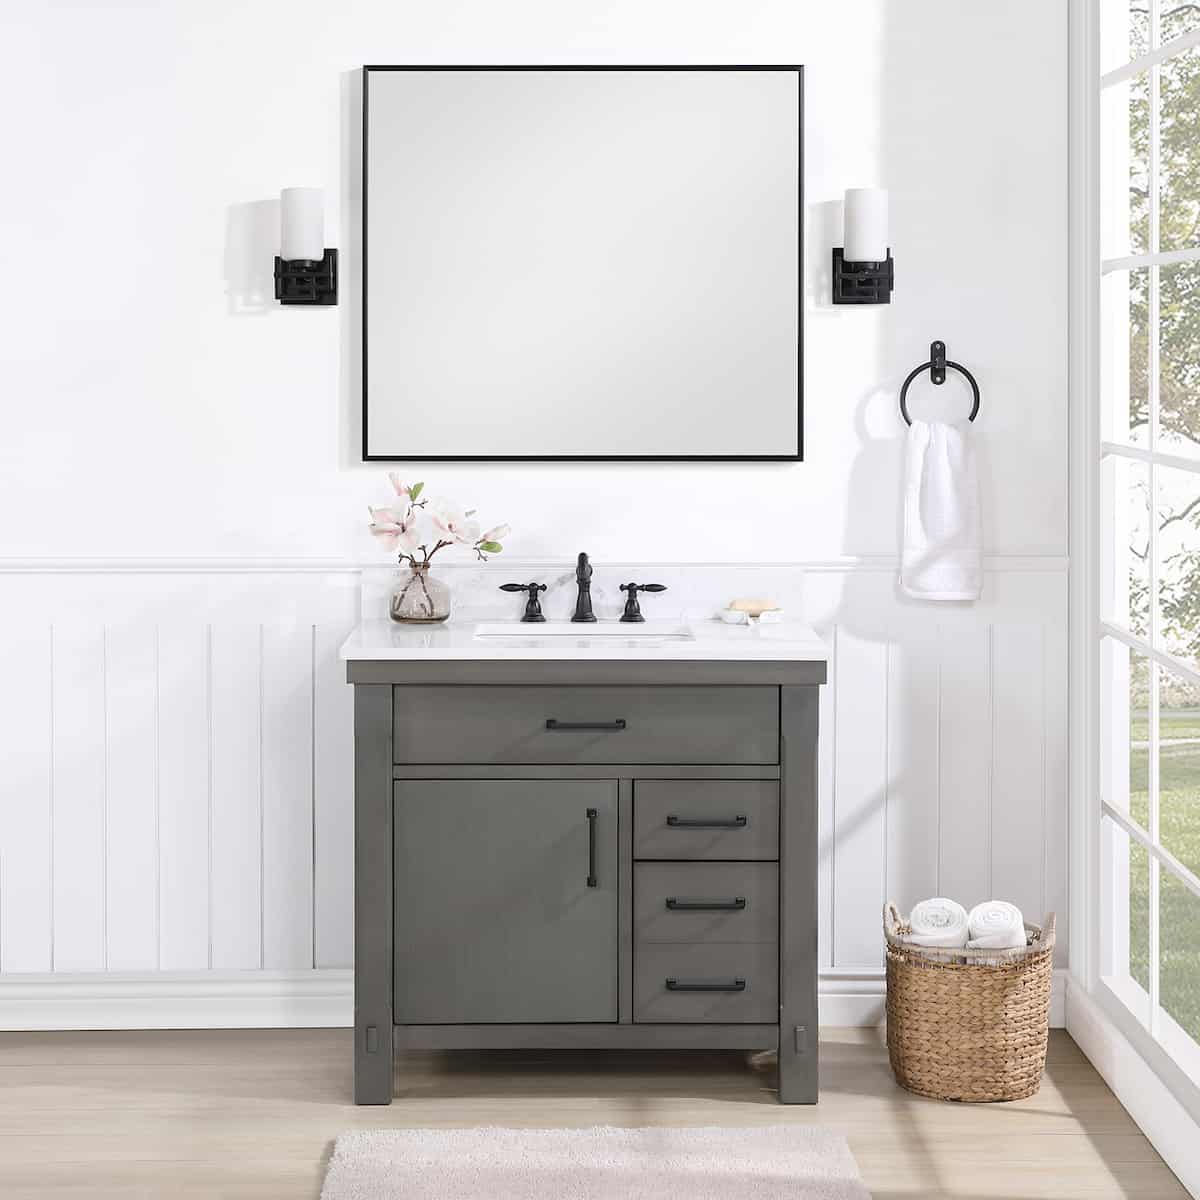 Vinnova Viella 36 Inch Freestanding Single Sink Bath Vanity in Rust Grey Finish with White Composite Countertop With Mirror in Bathroom 701836-RU-WS